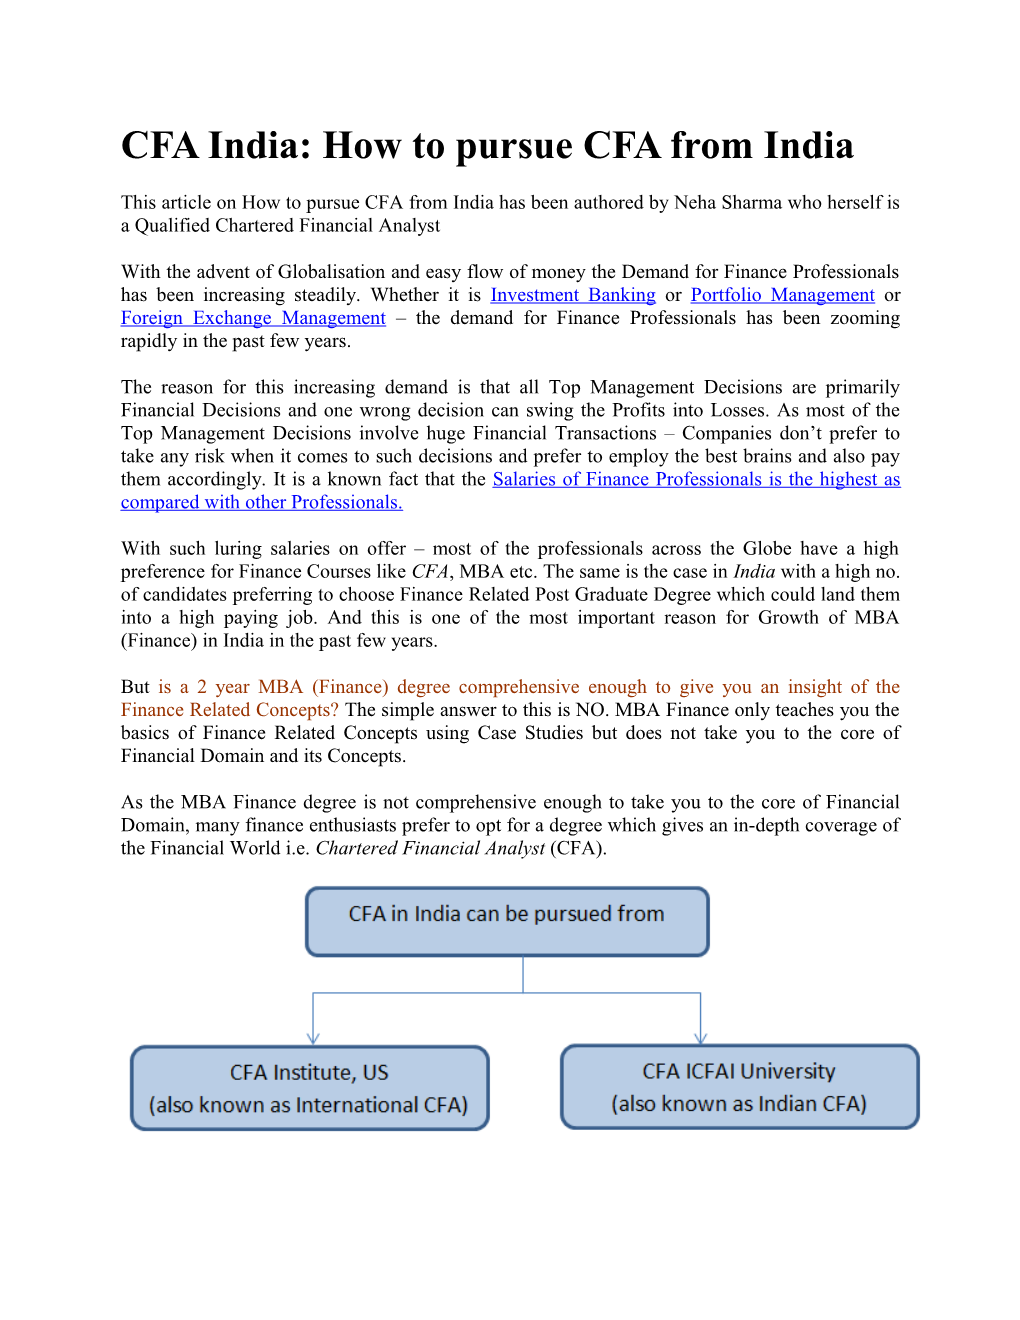 CFA India: How to Pursue CFA from India